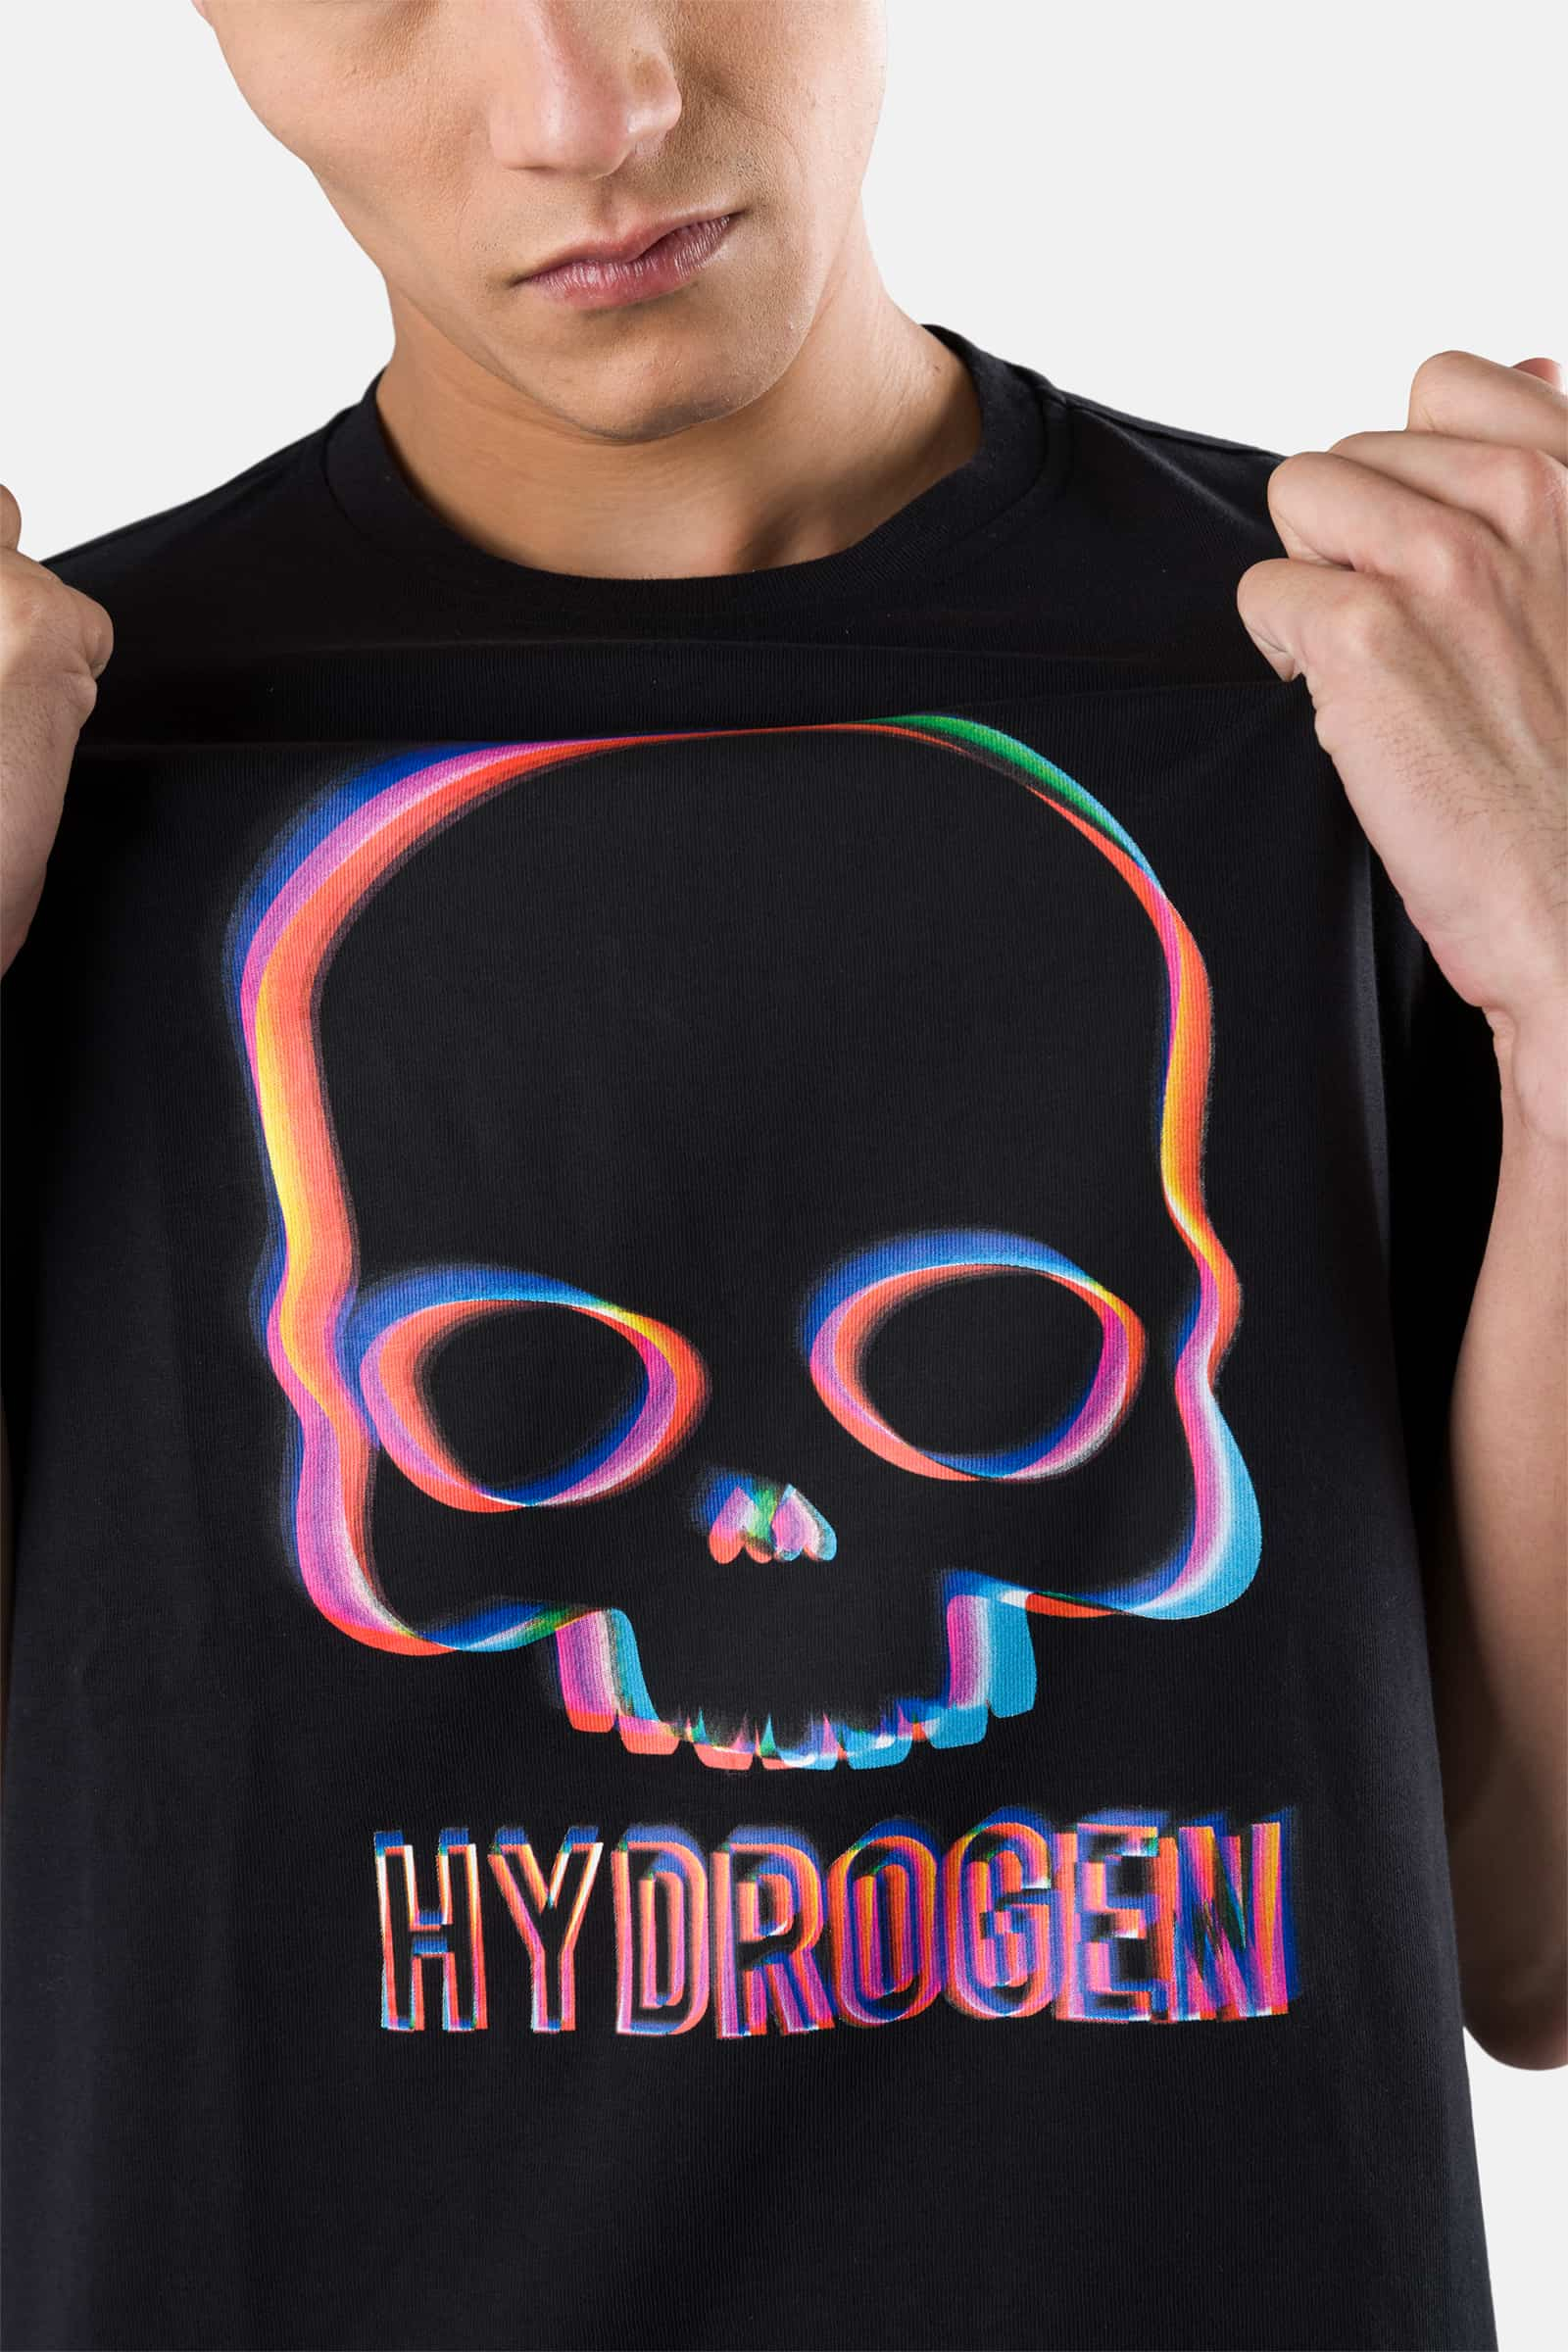 T-SHIRT HYDROGEN - BLACK - Abbigliamento sportivo | Hydrogen